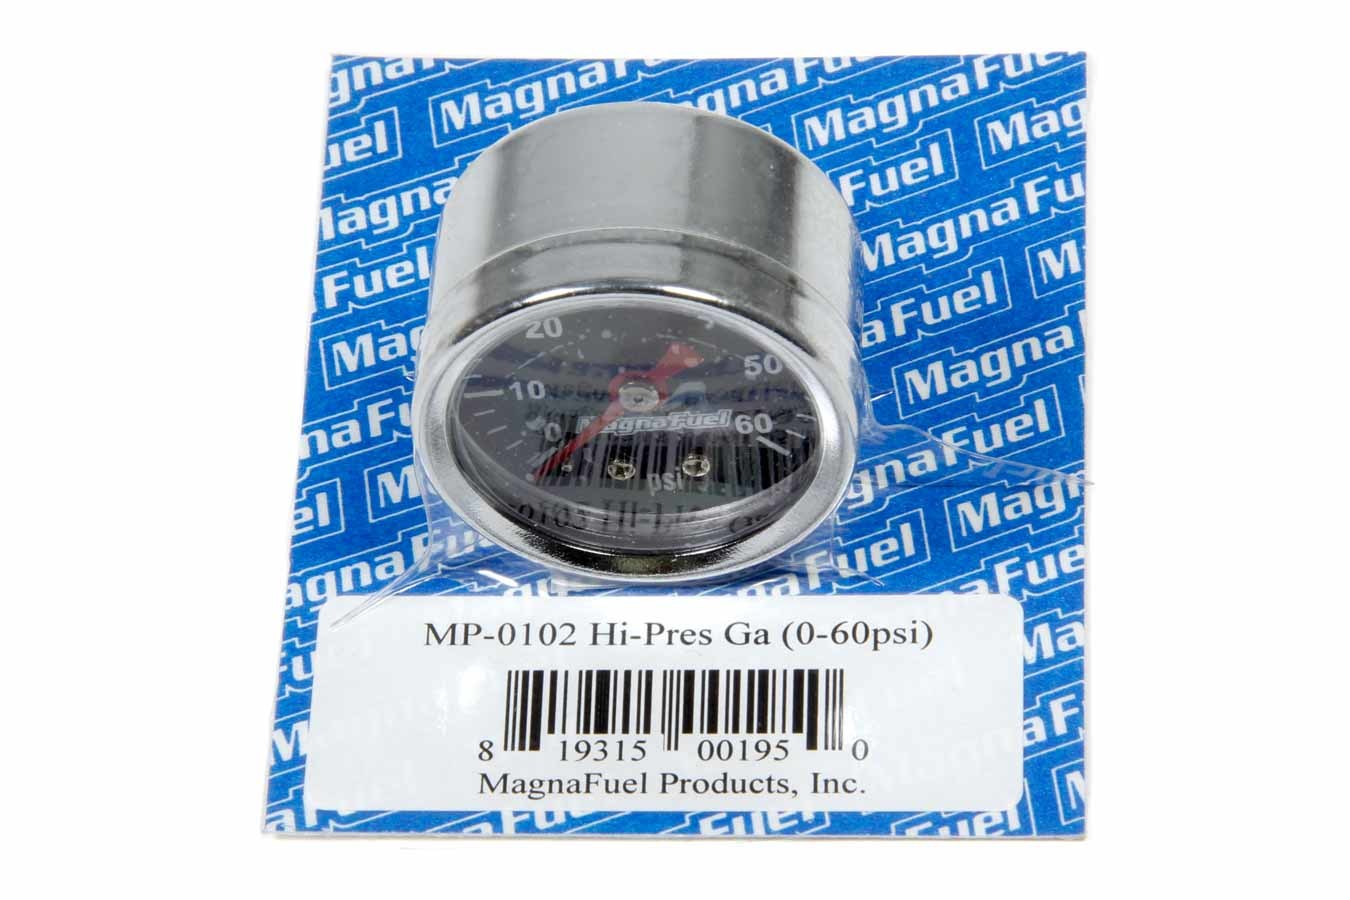 High Pressure Fuel Gauge 0-60psi - MP-0102